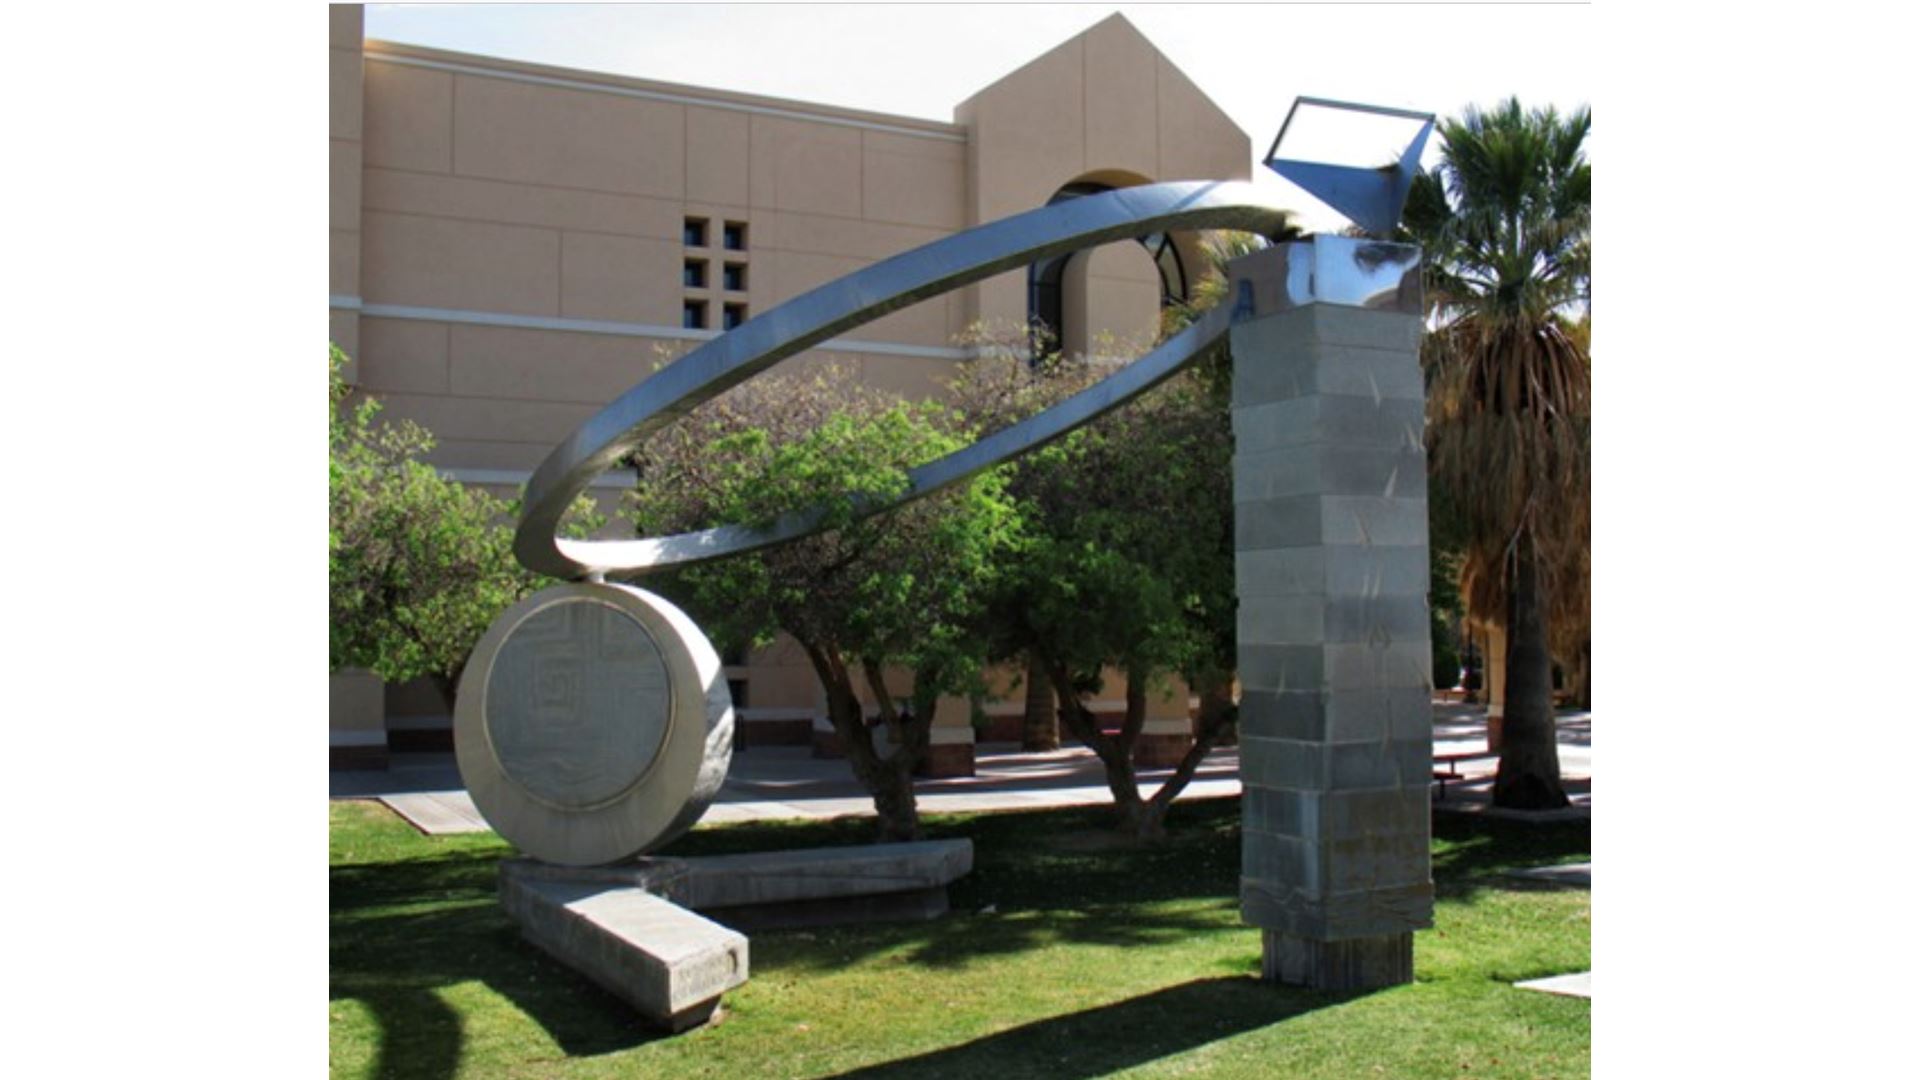 NMSU to add public art to campus master plan